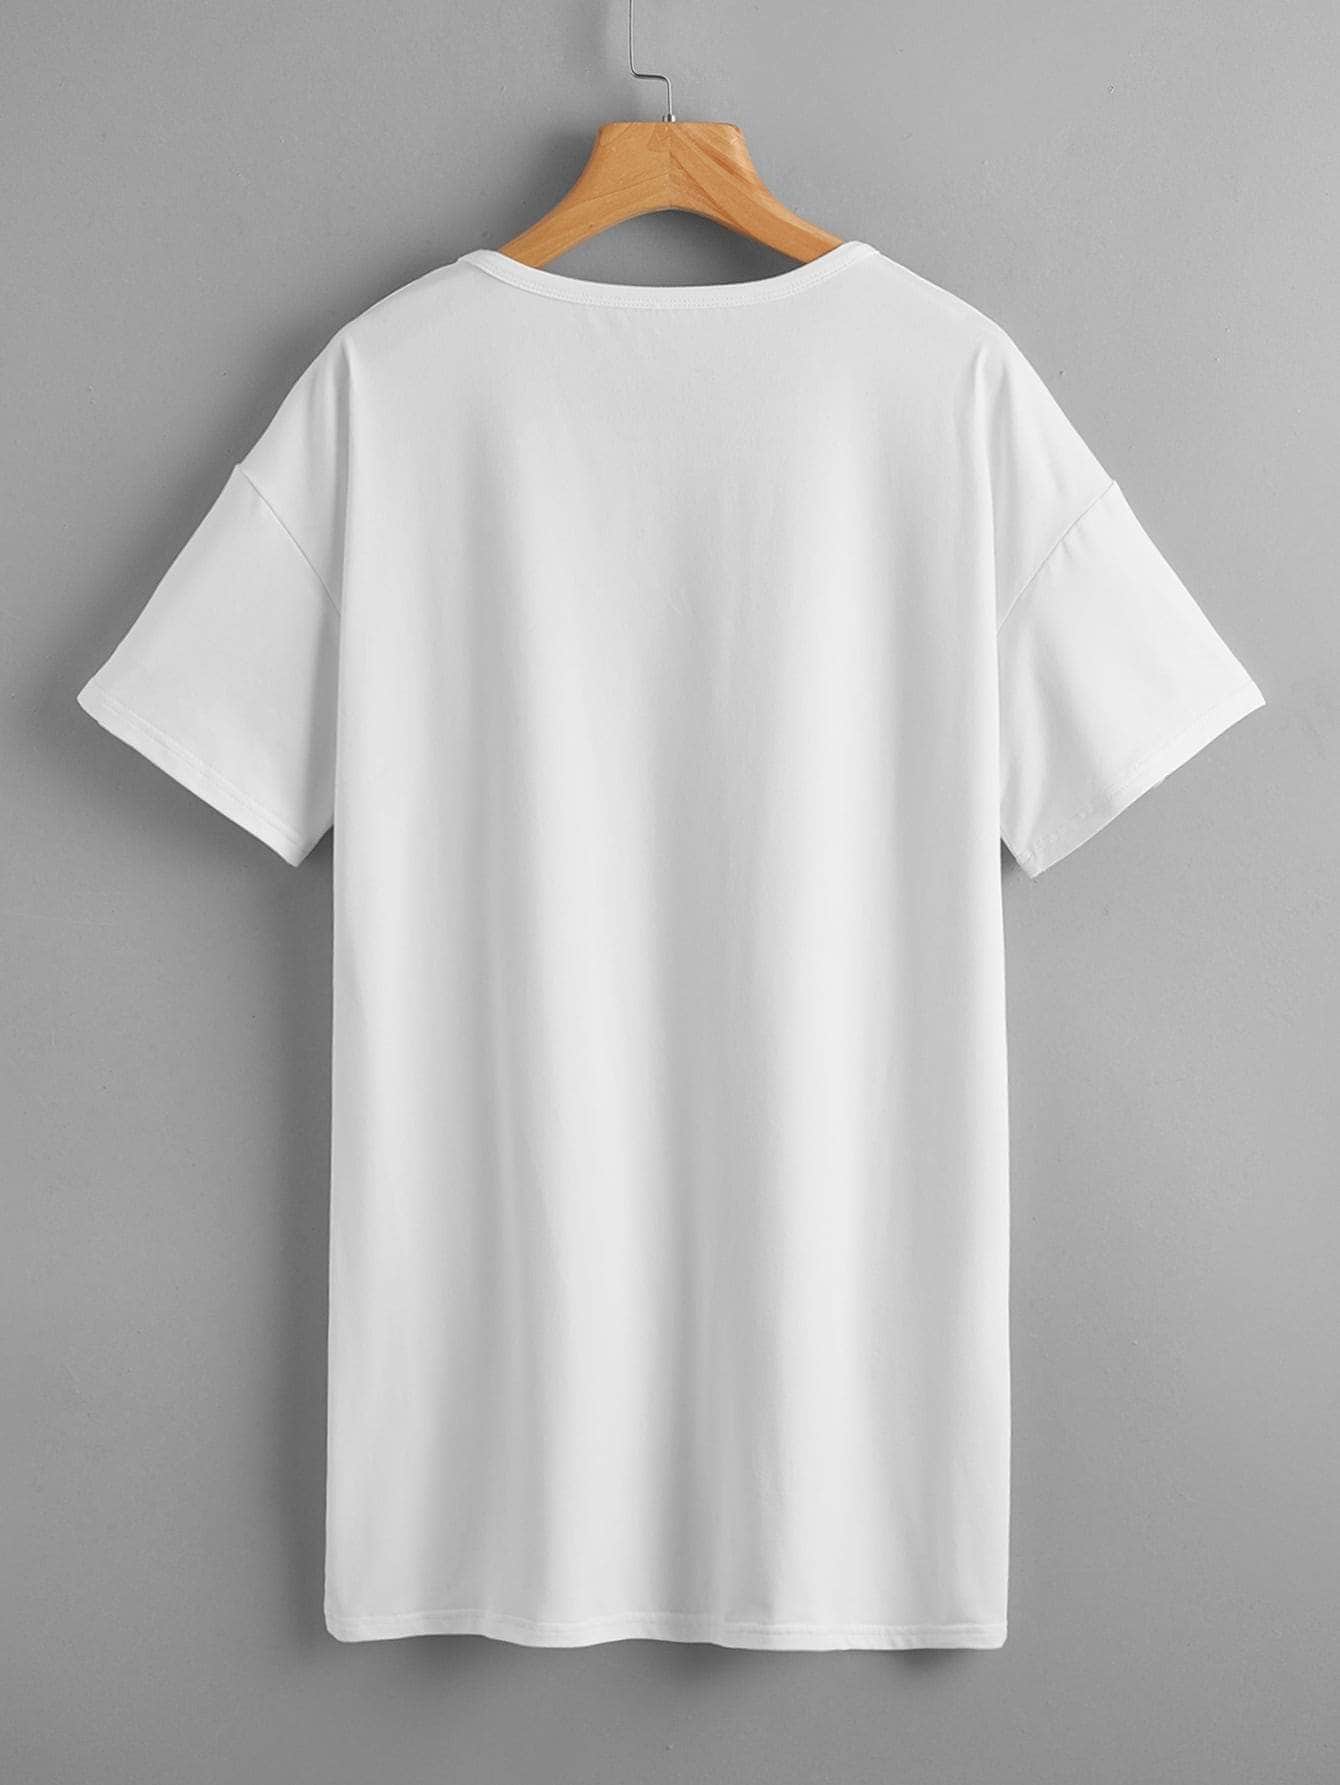 Blanco / M Camisetas Liso Básico